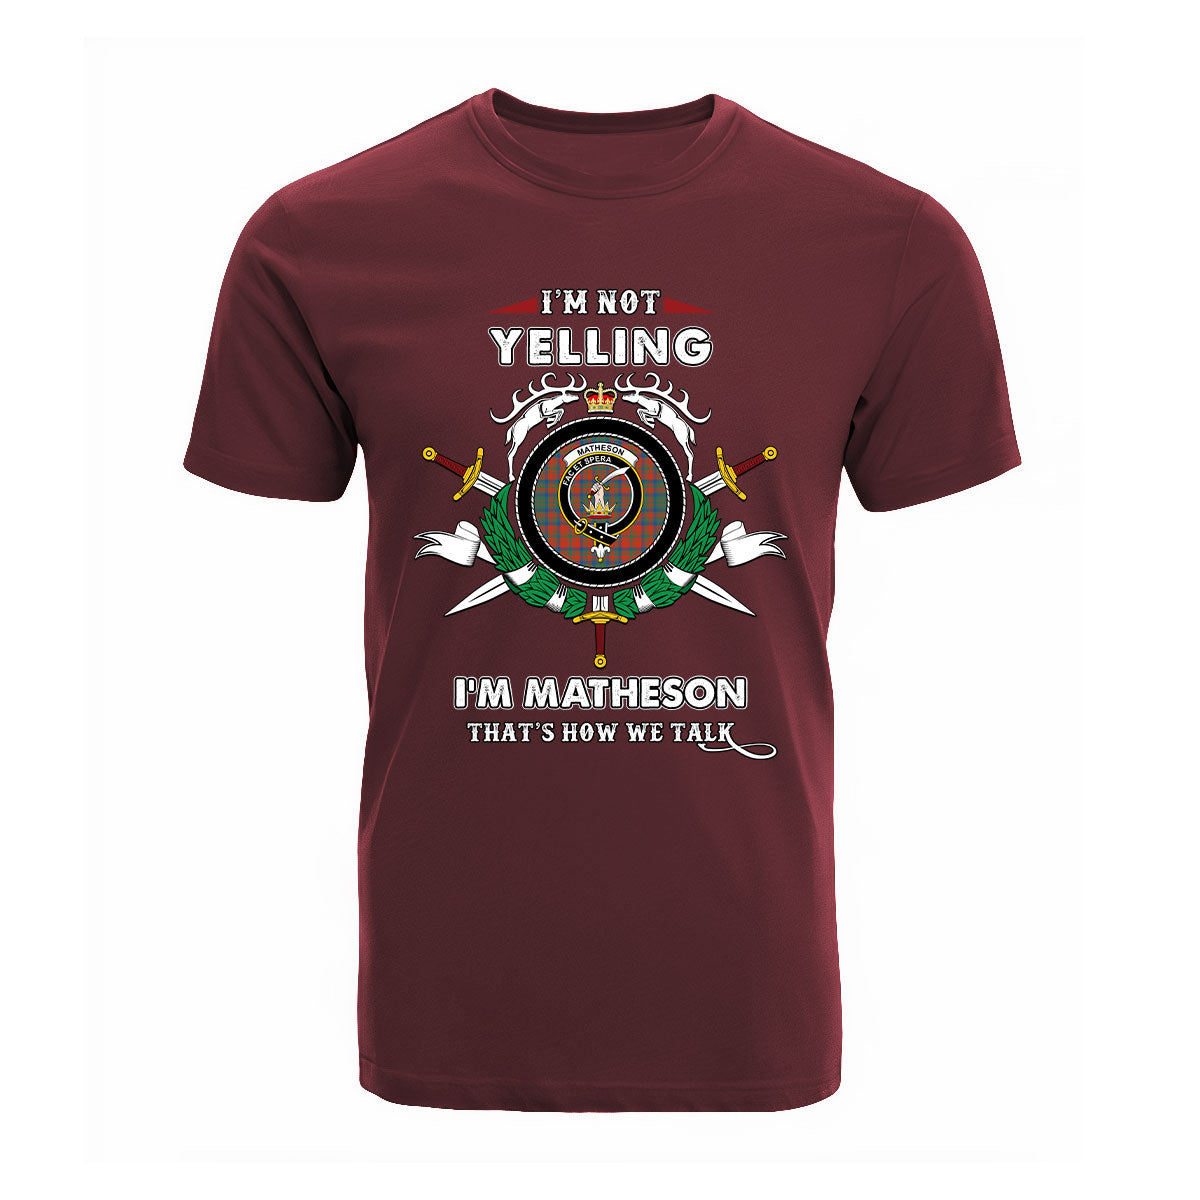 Matheson Tartan Crest T-shirt - I'm not yelling style